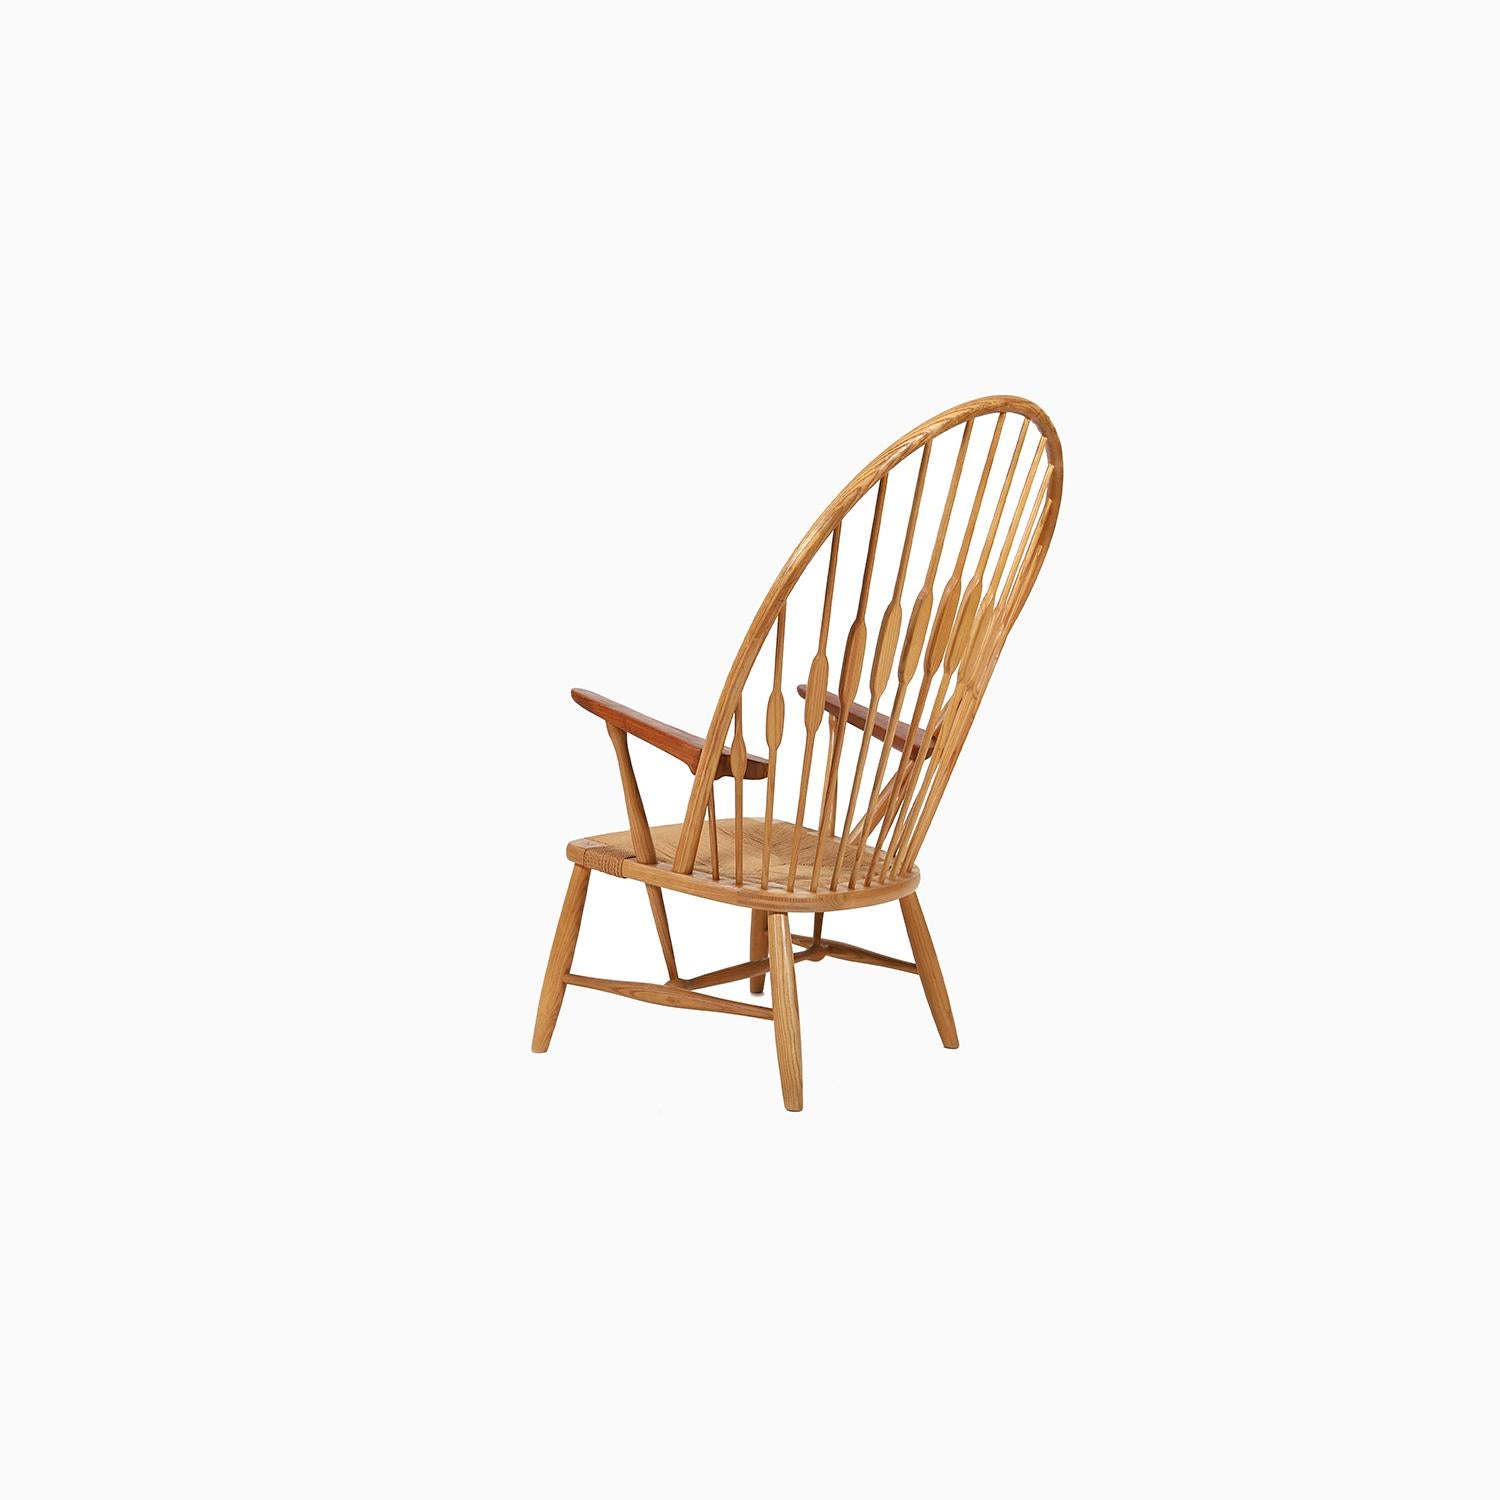 20th Century Hans J. Wegner Peacock Lounge Chair For Sale